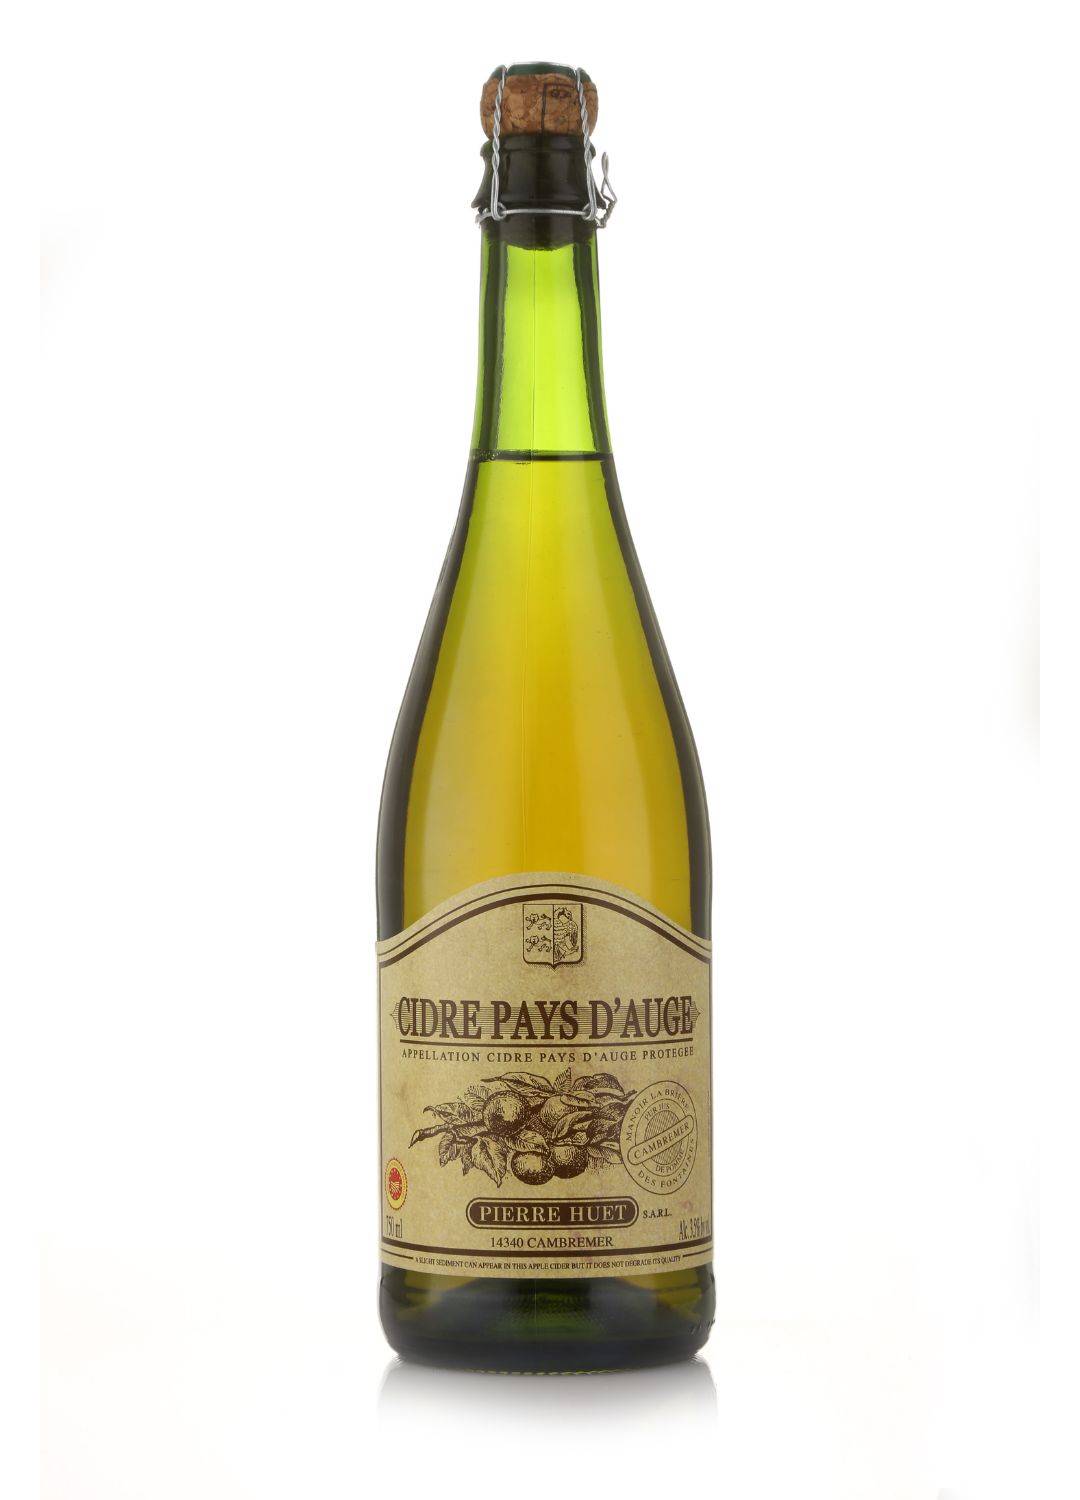 Bottle of Pierre Huet Cidre Pays d'Auge Demi-Sec form French Cider & Spirits